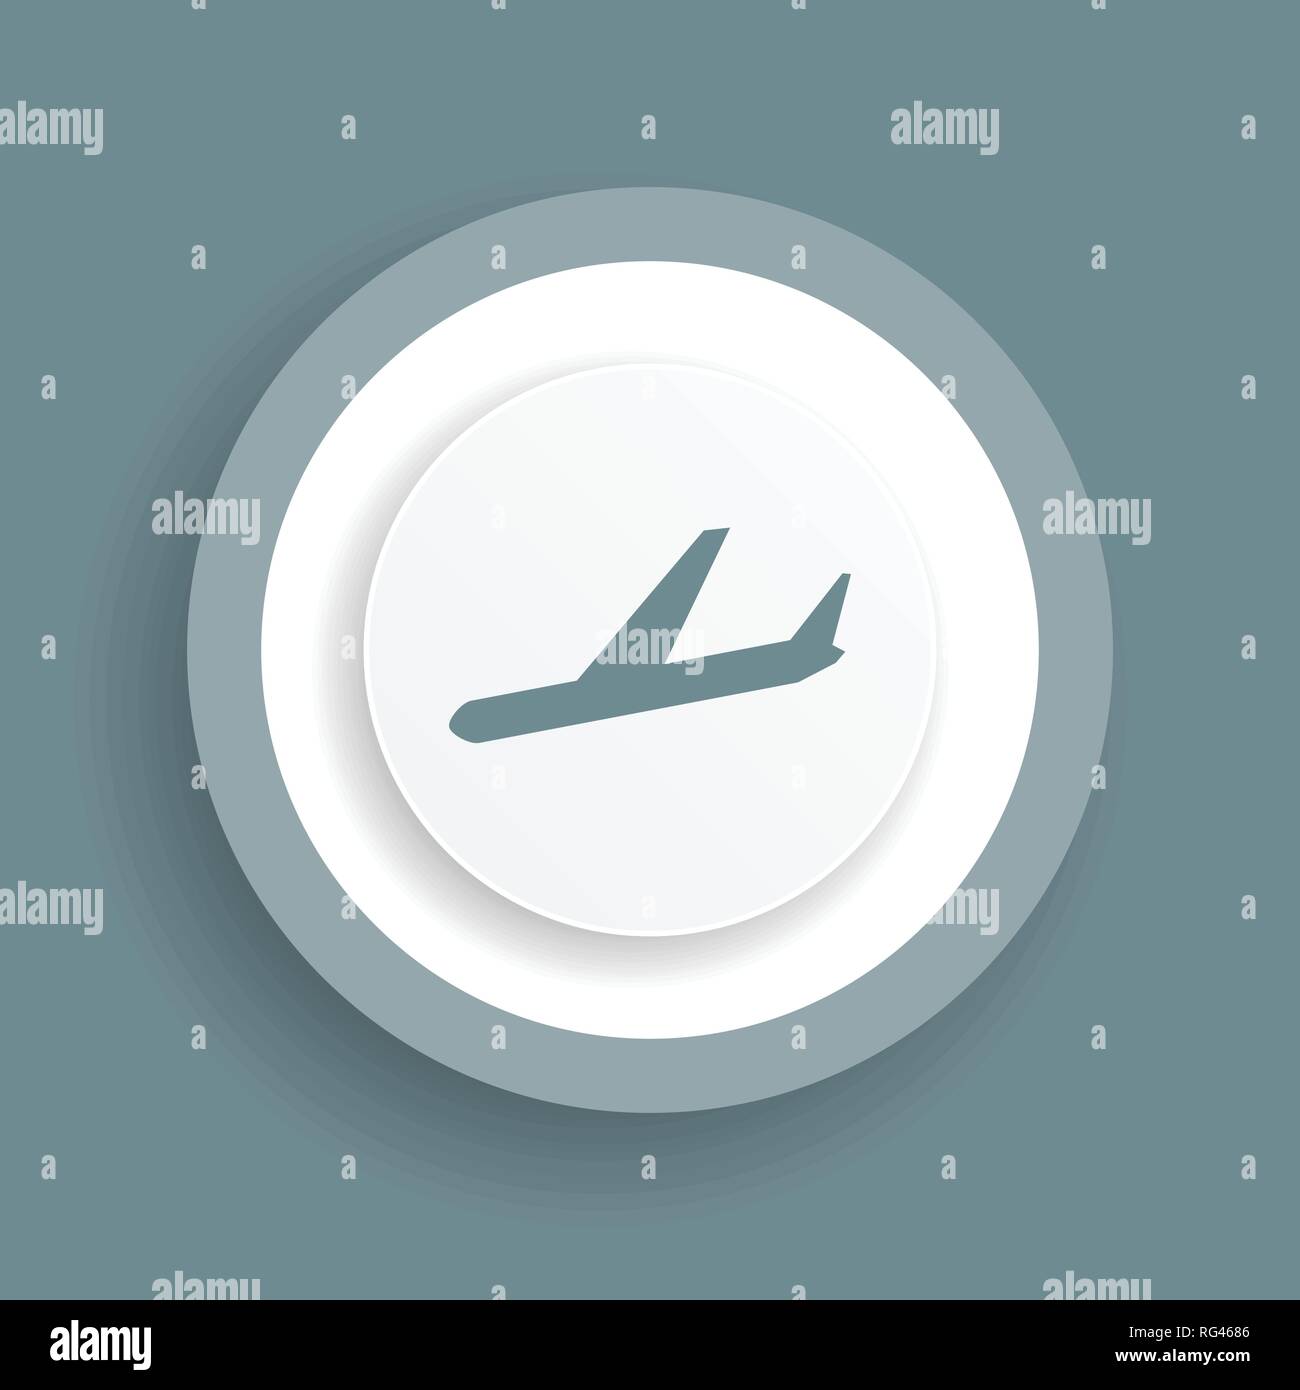 Plane arrivals vector icon Stock Vector